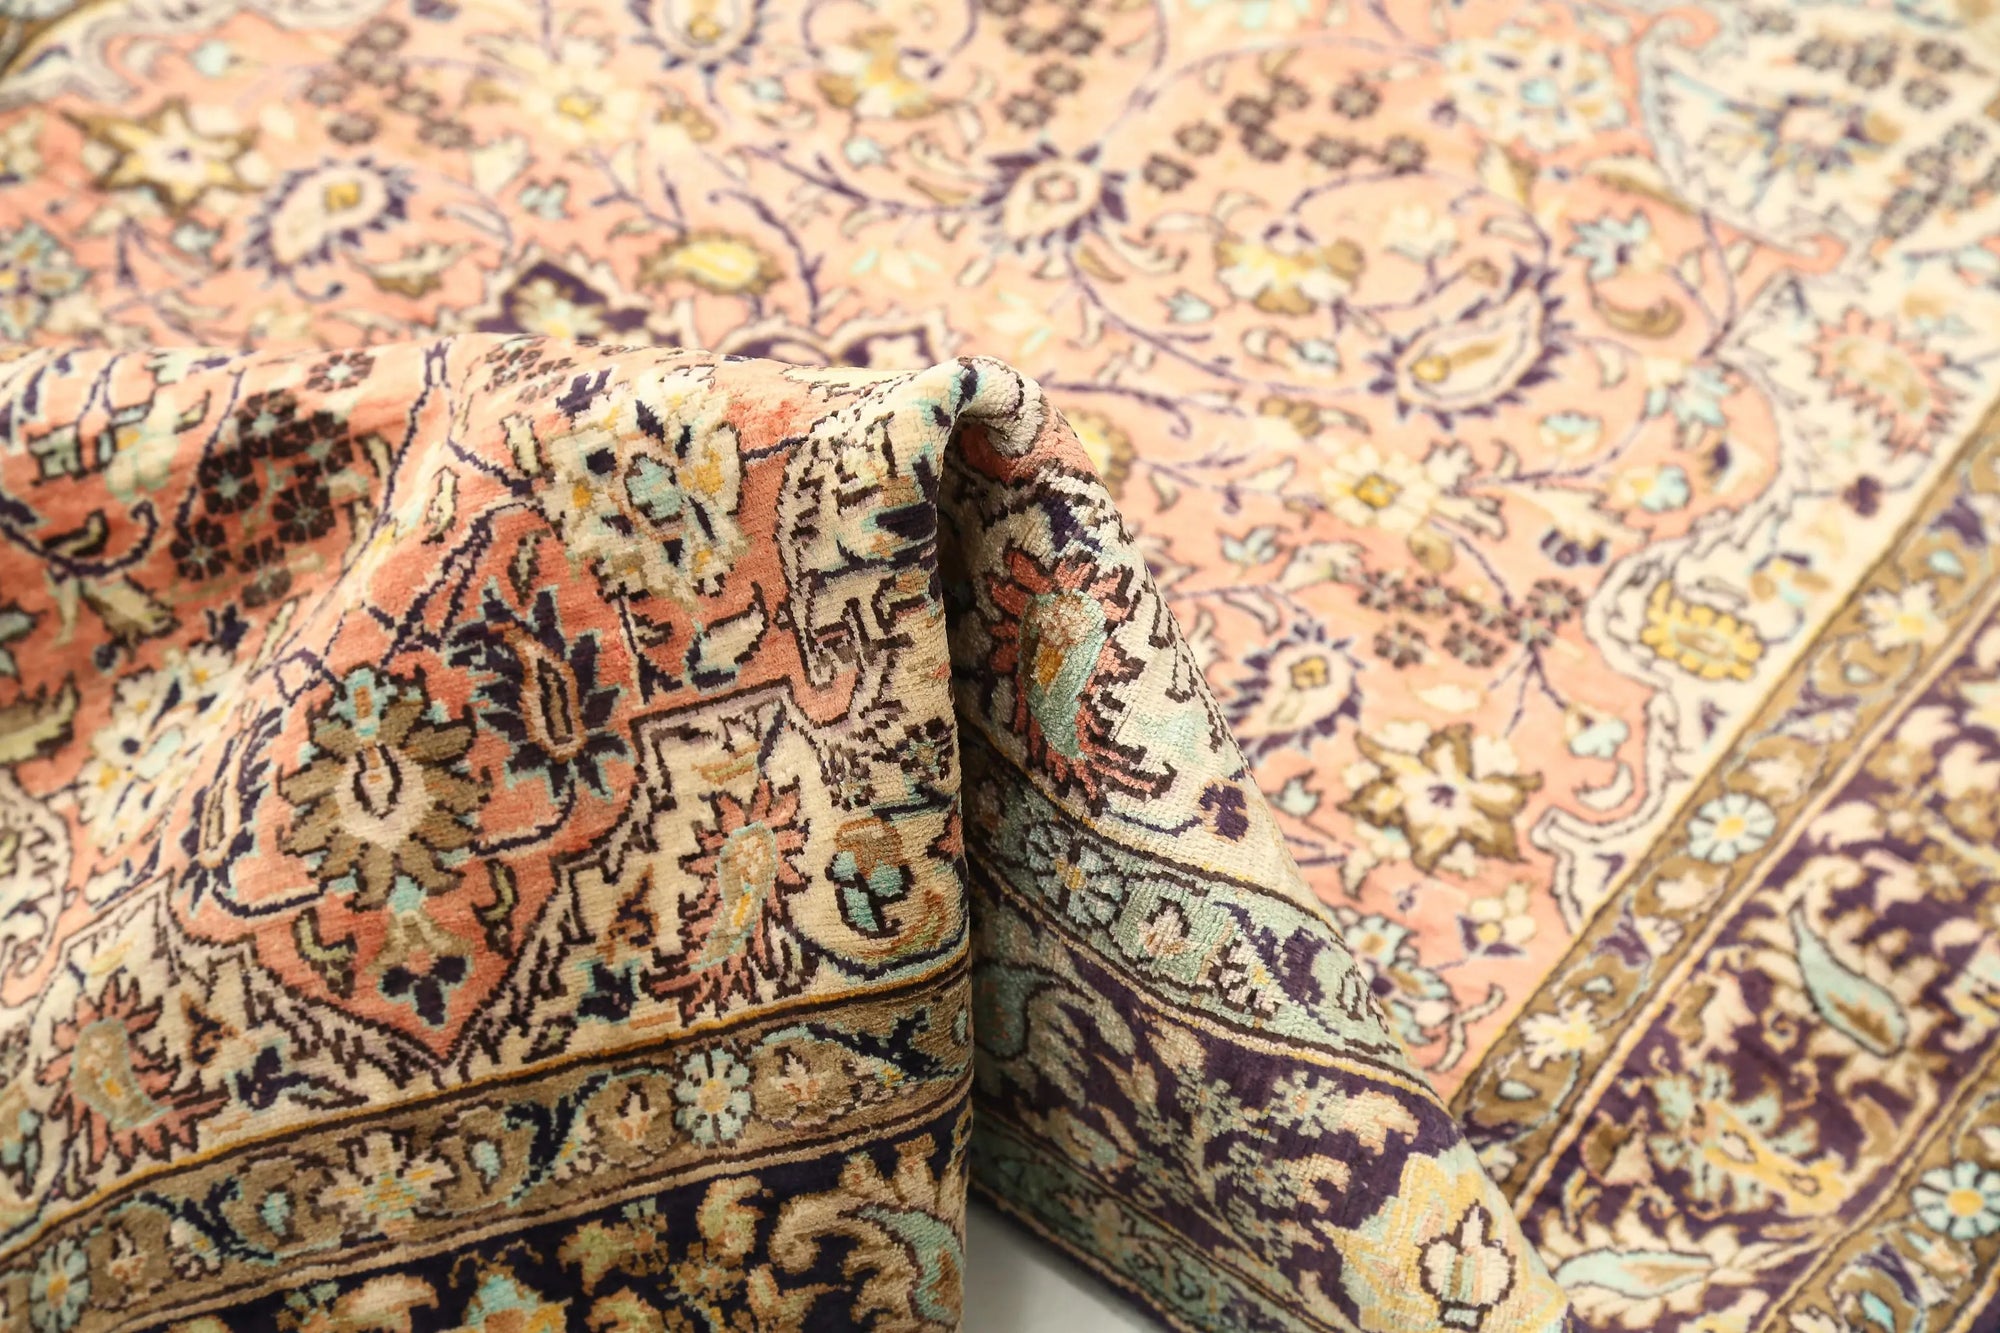 Hand Knotted Masterpiece Persian Qum Silk Rug - 3'4'' x 4'10'' - Arteverk Rugs Area rug